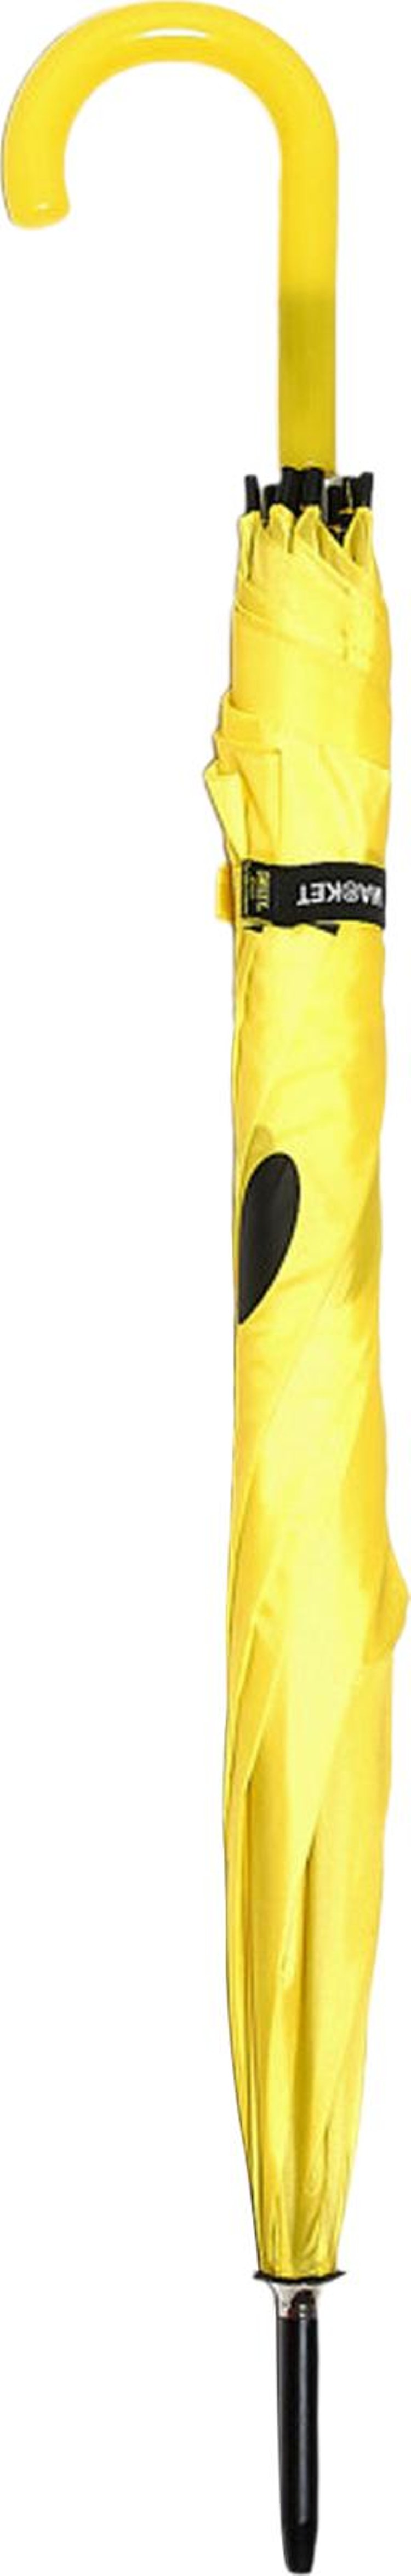 Market Smiley Umbrella 'Yellow'